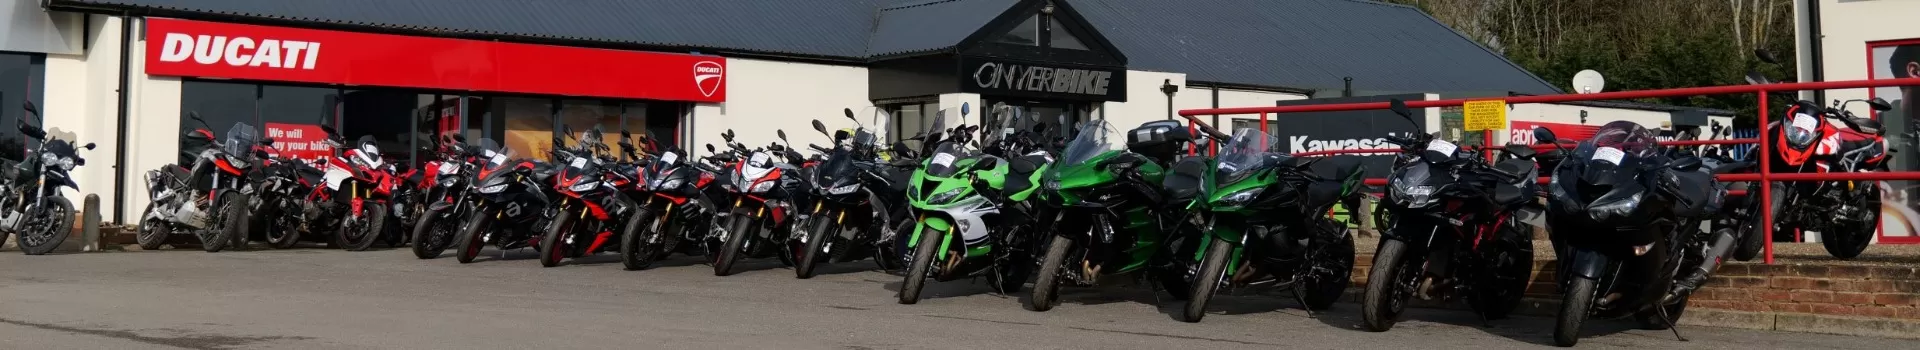 Onyerbike and Ducati showroom and our range of bikes